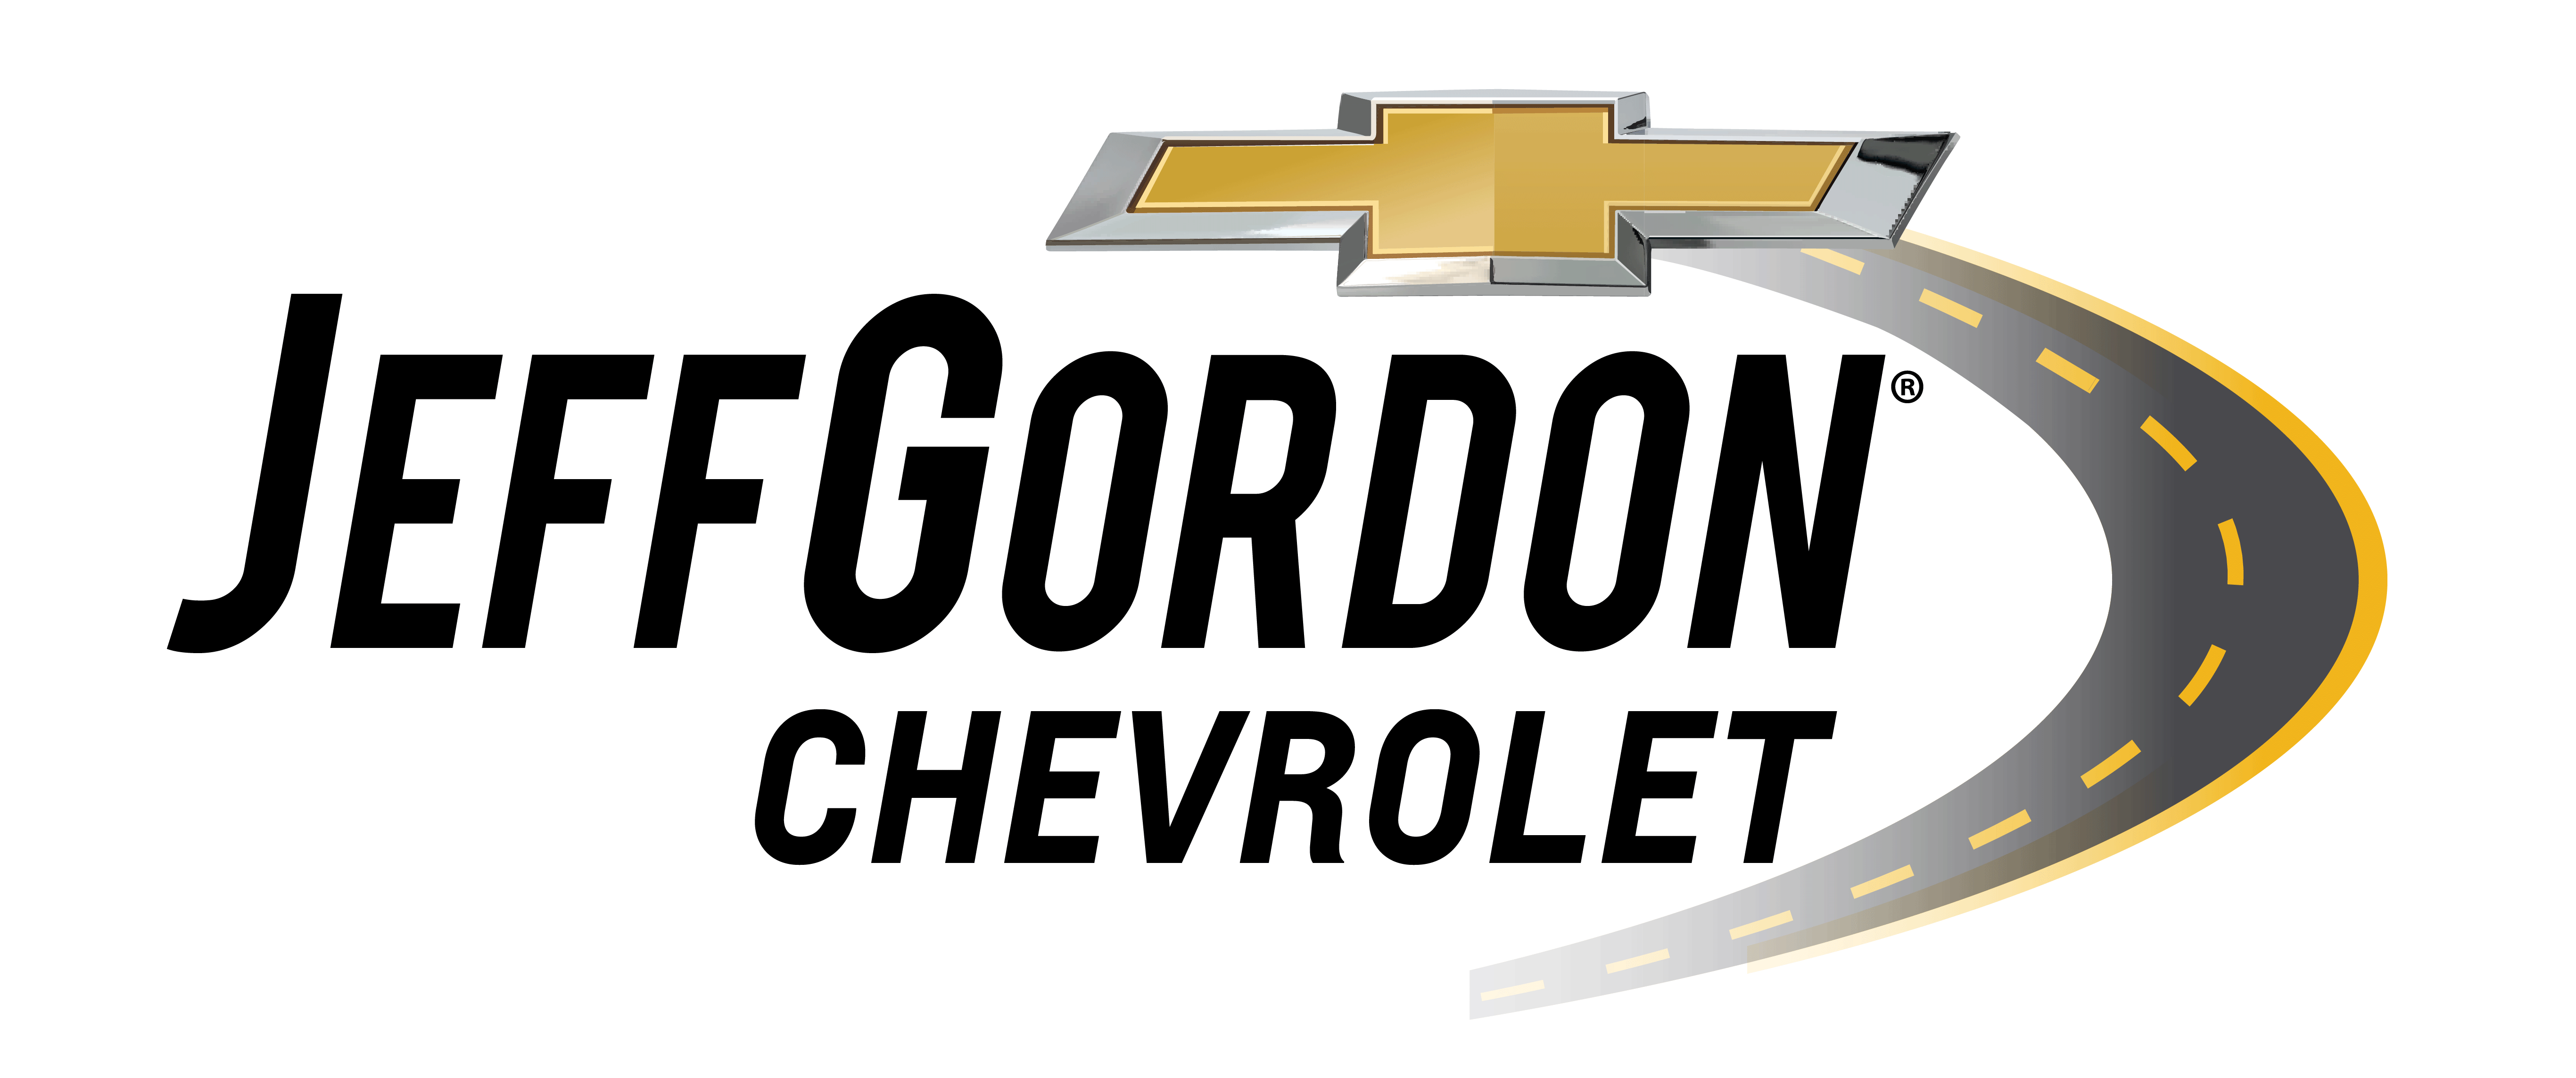 Jeff Gordon Chevrolet